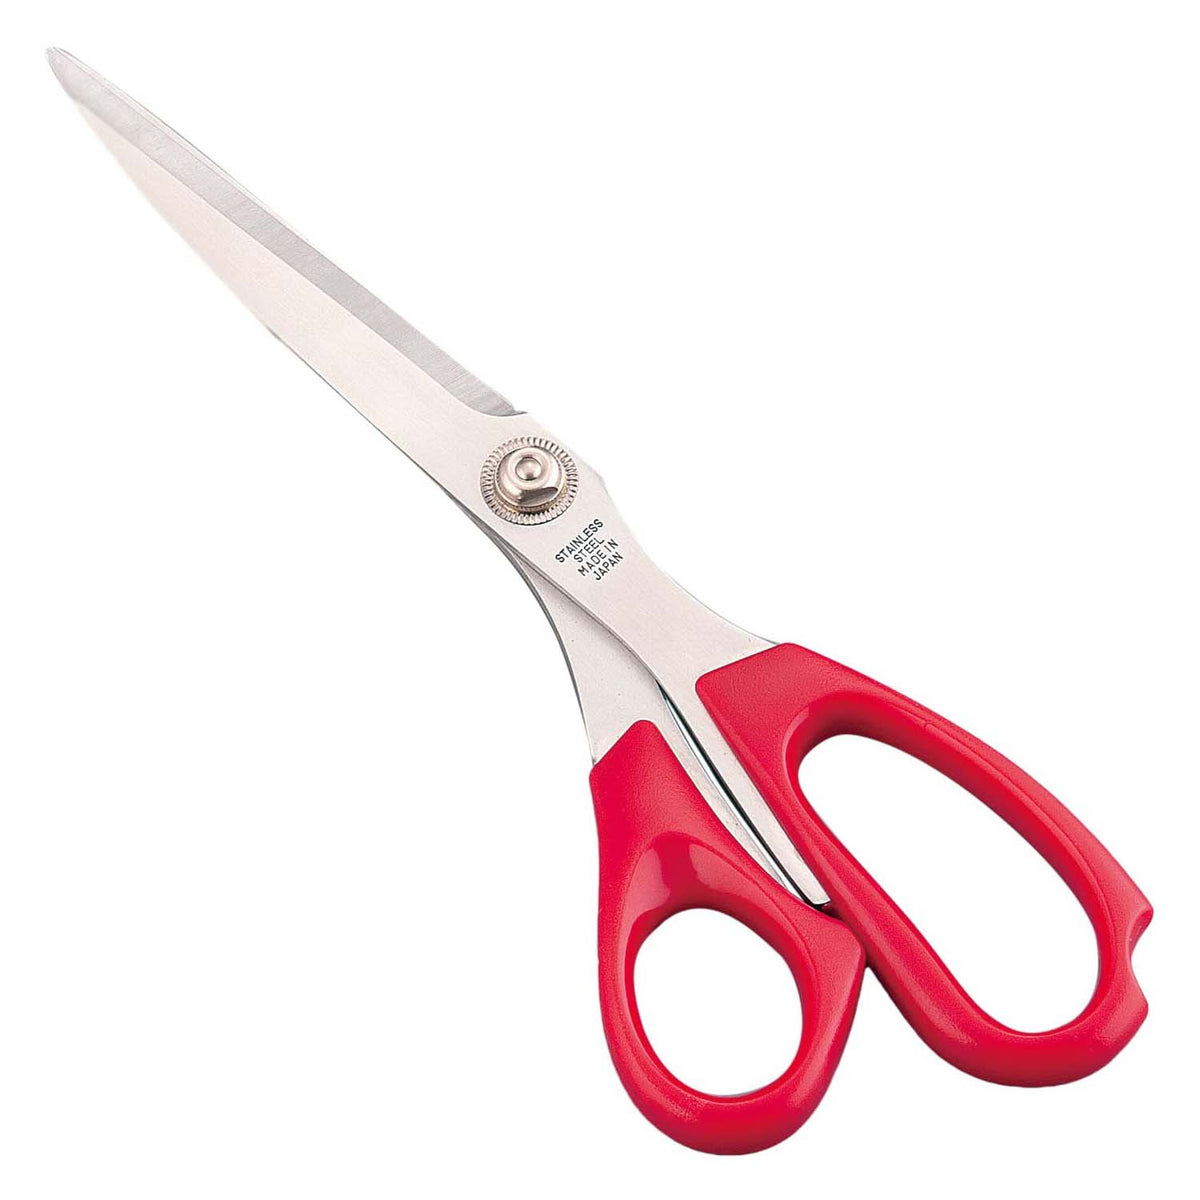 INTECKaneki Stainless Steel Kitchen Scissors with Curved Blade